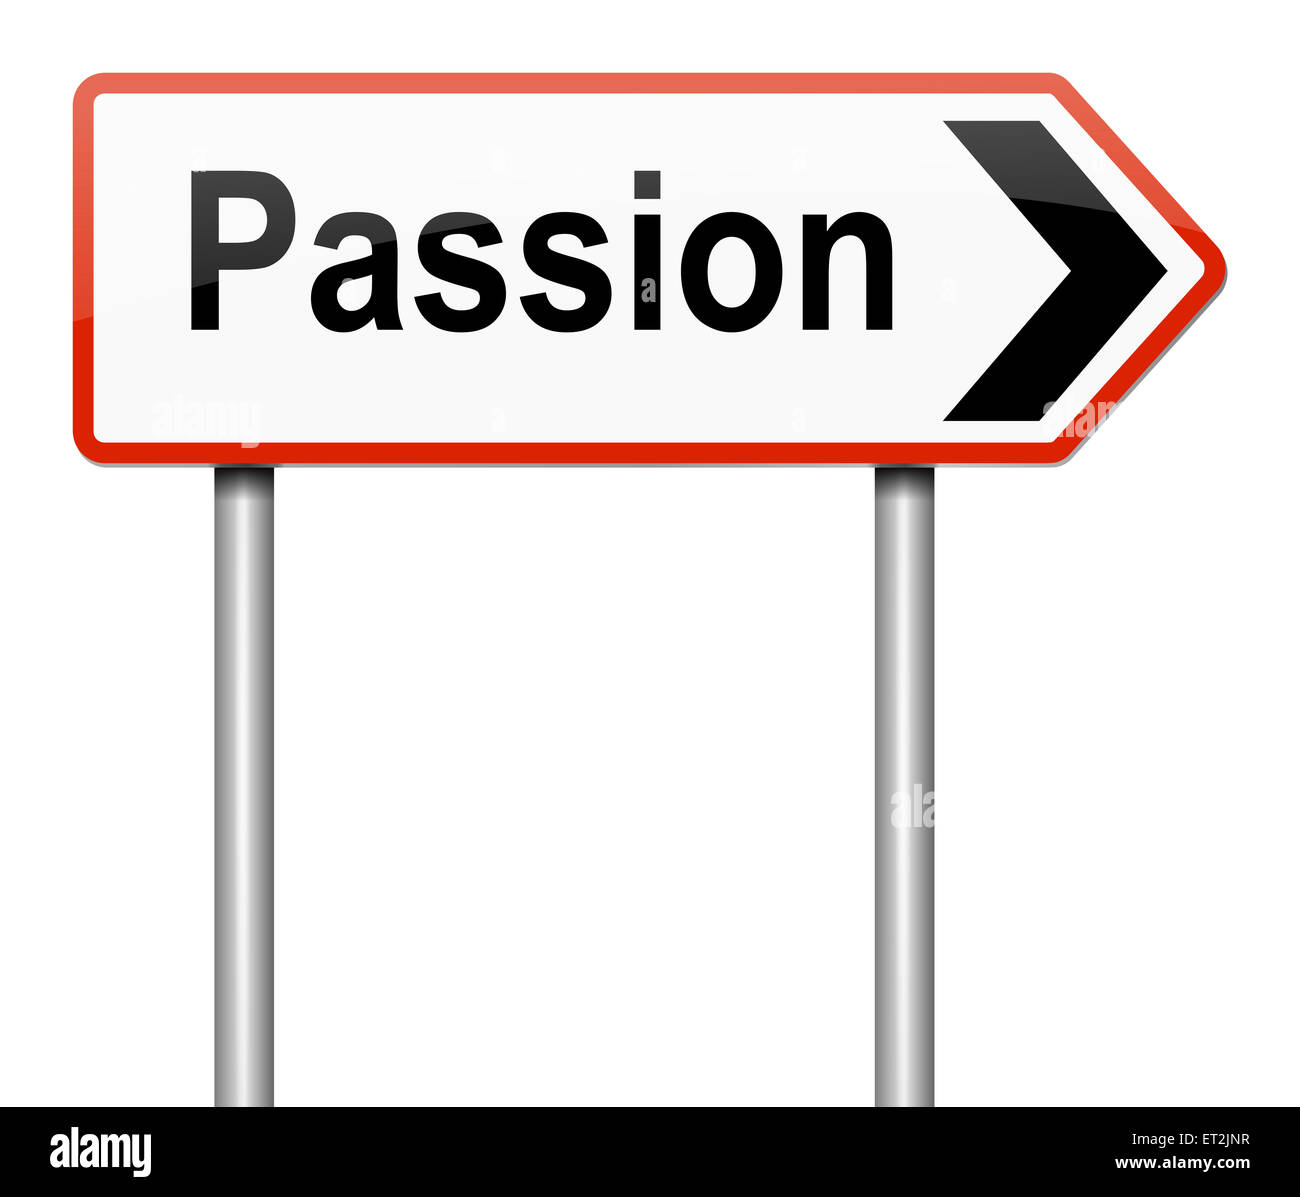 Passion concept. Stock Photo